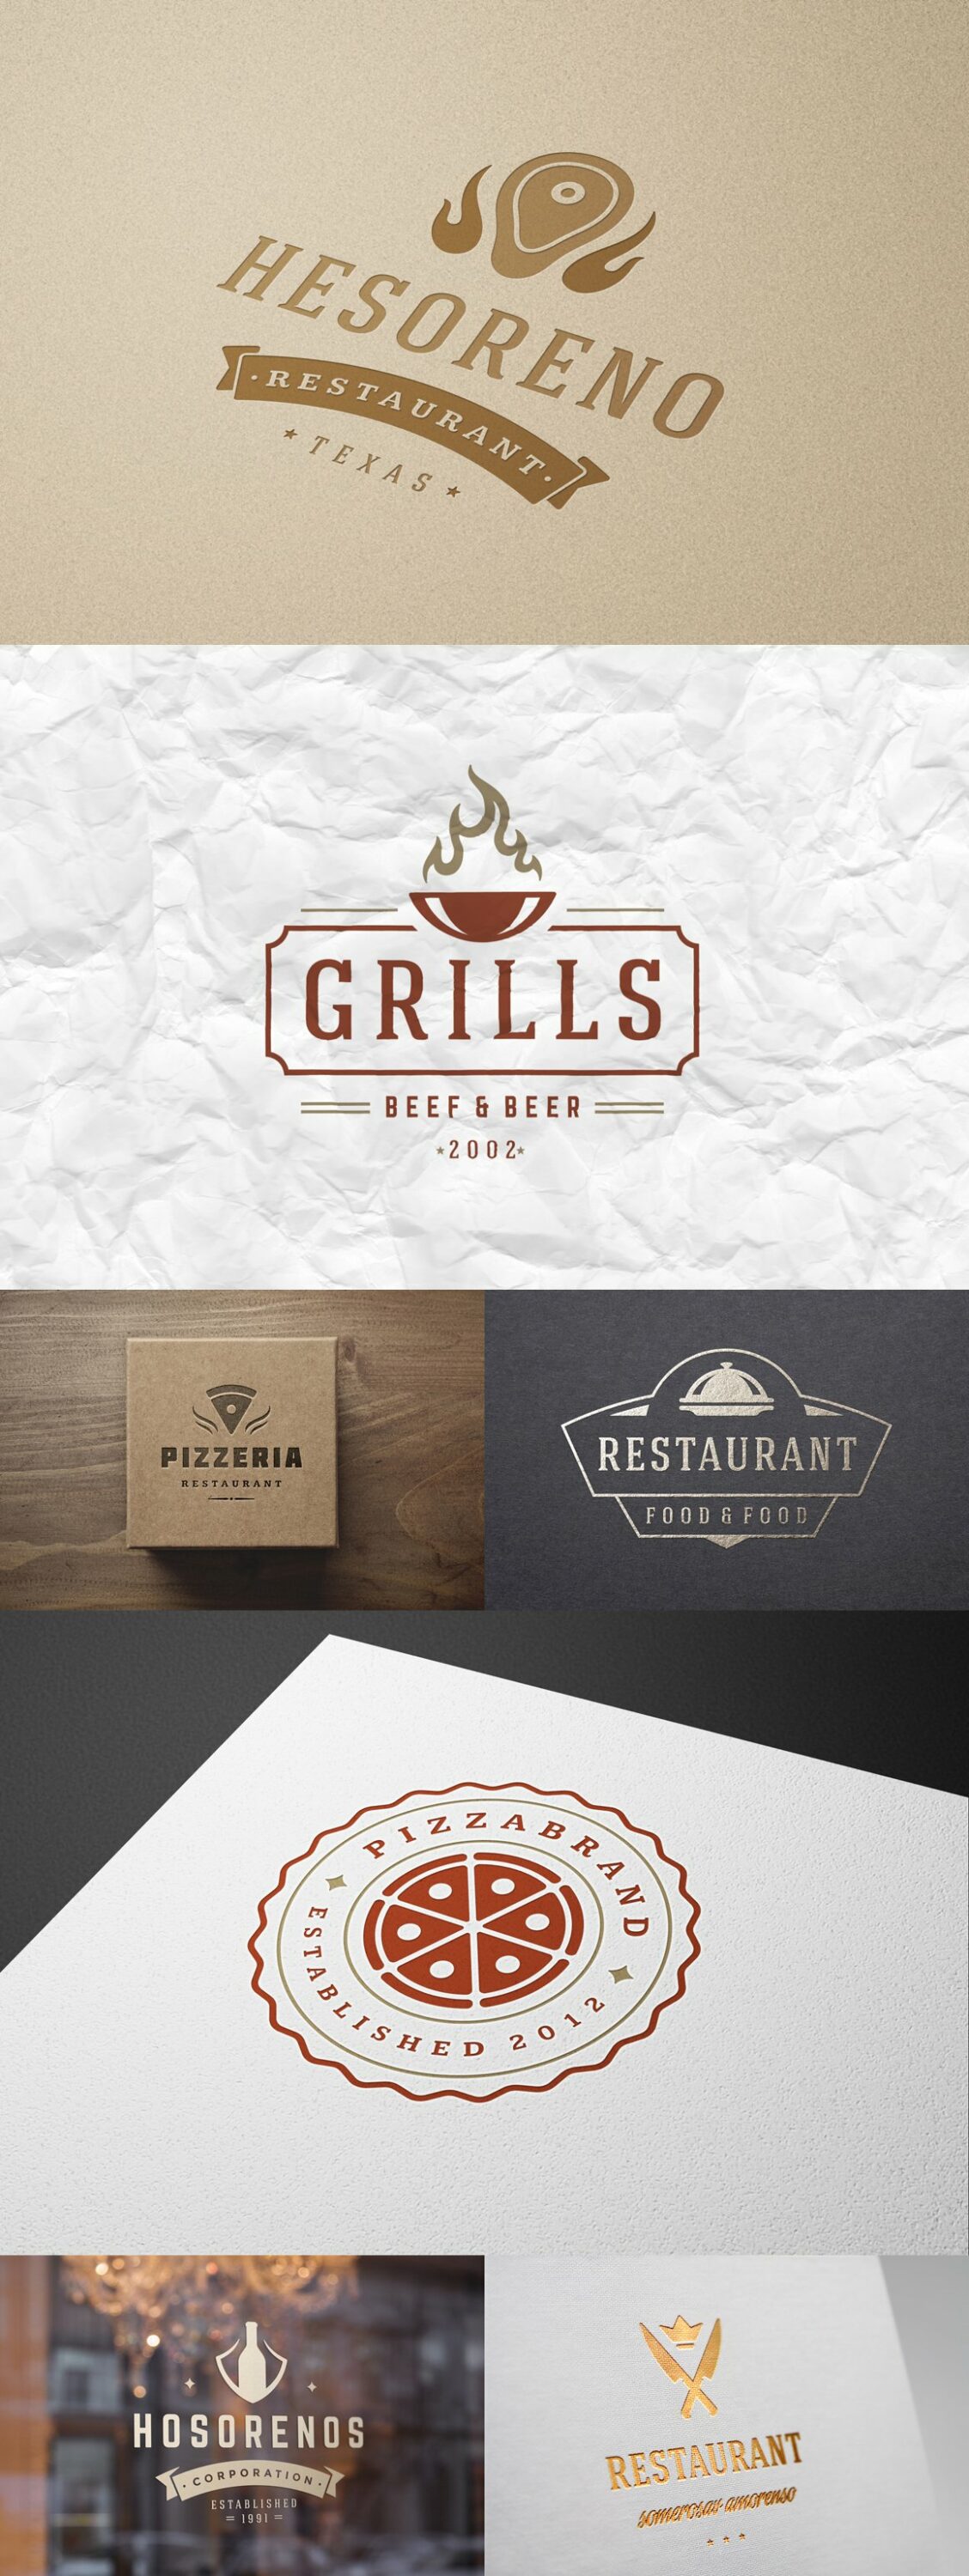 Premium food logos in different styles.